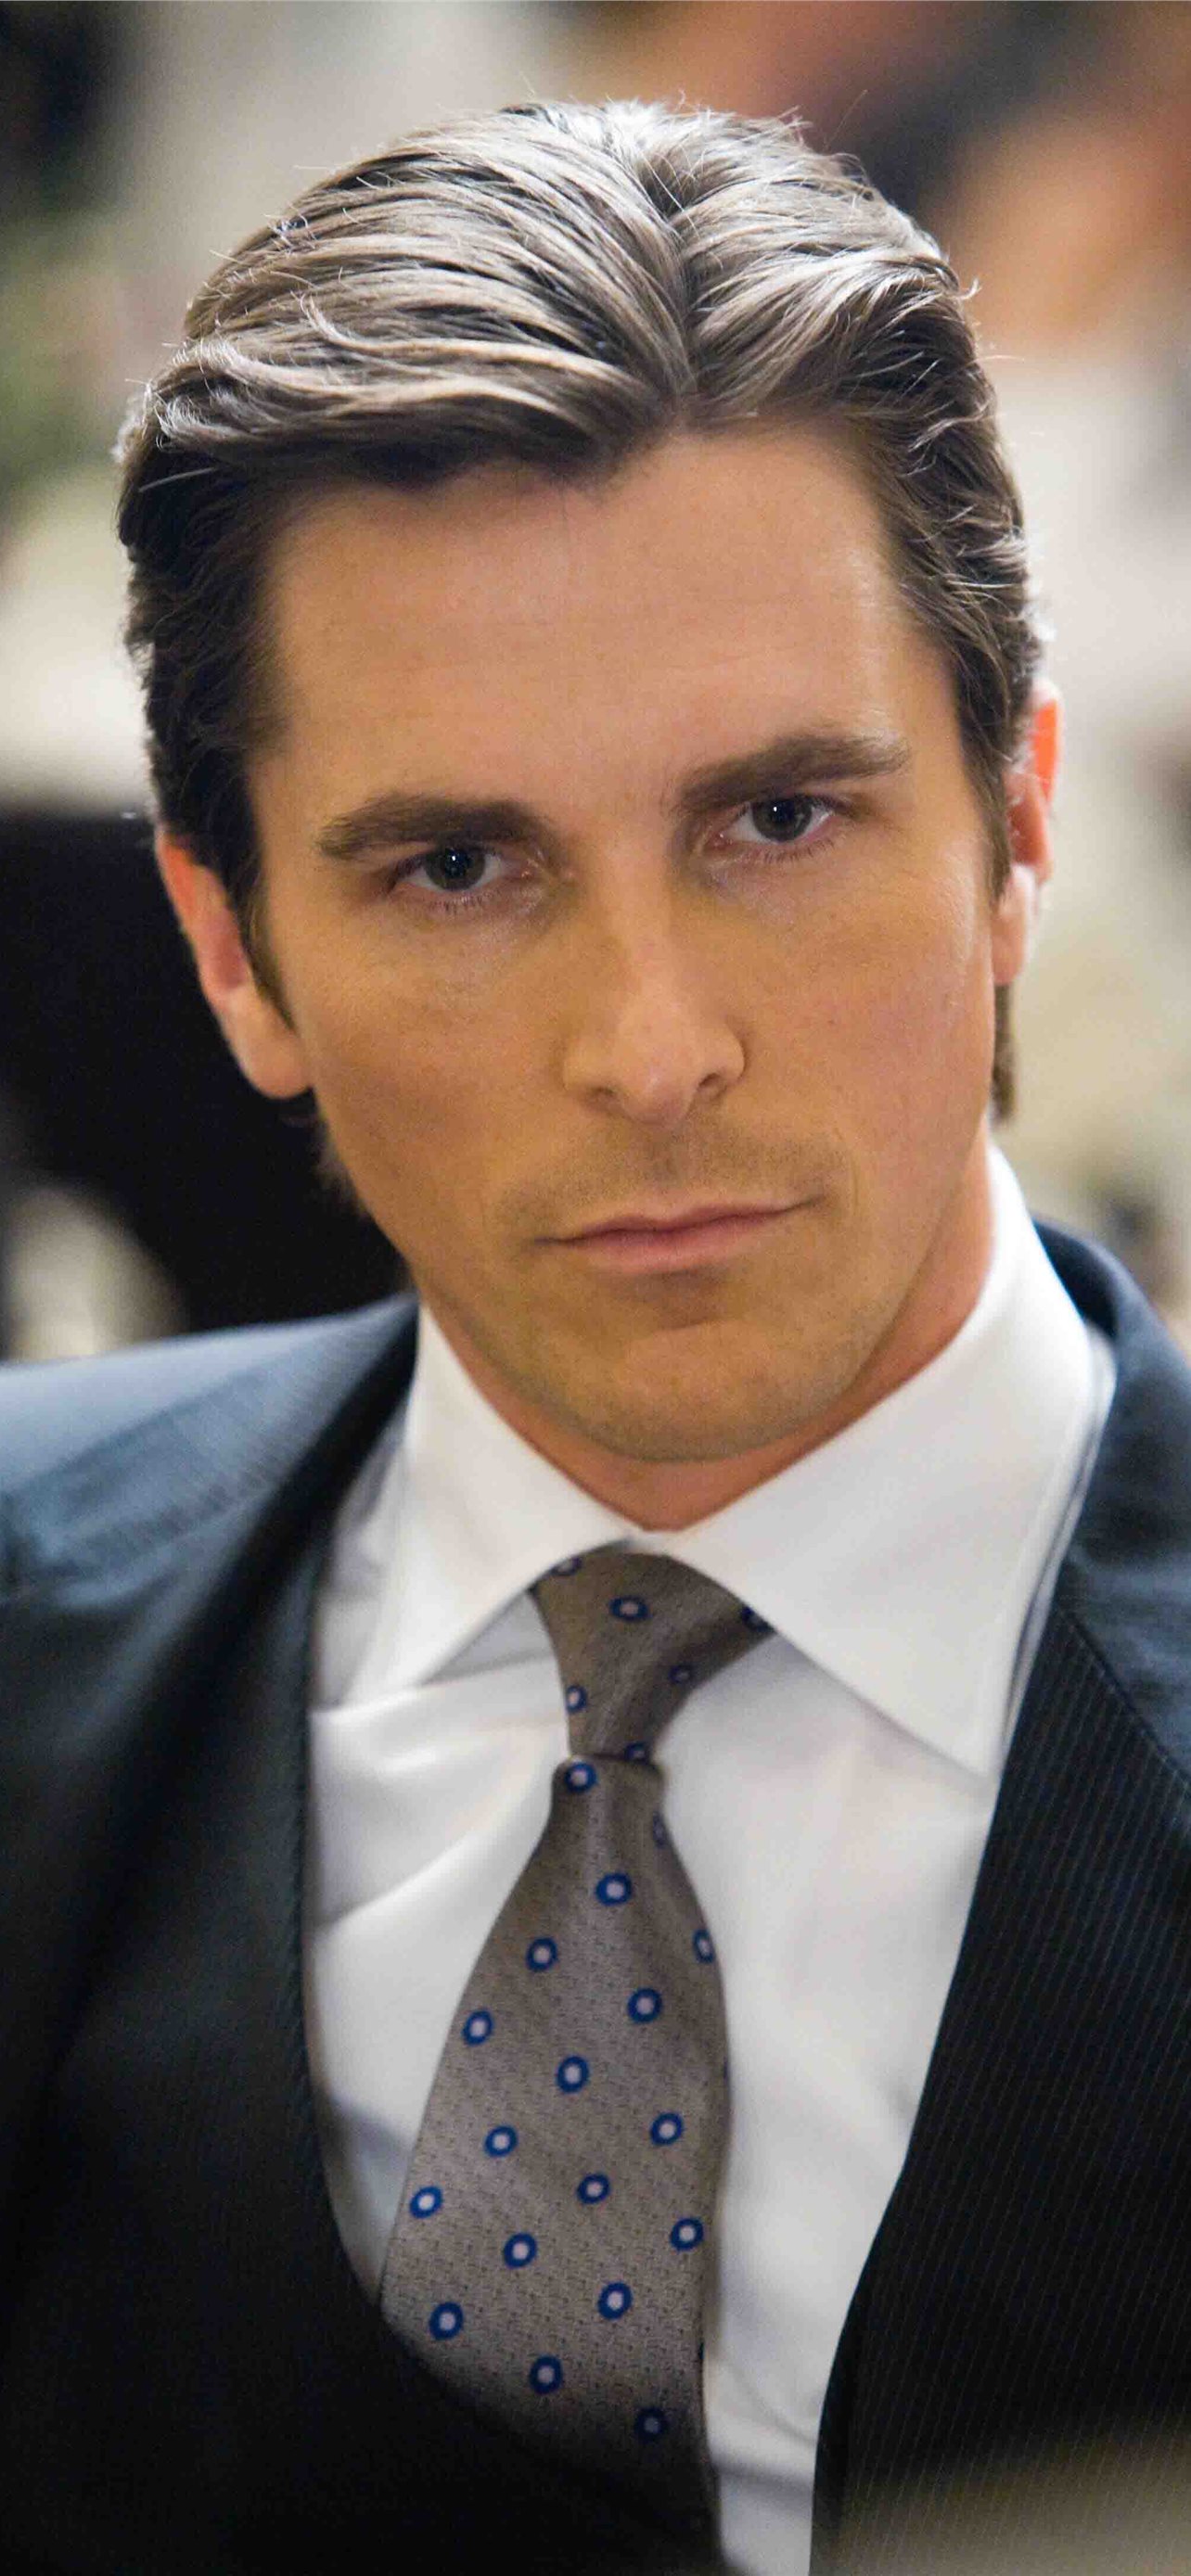 Batman Christian Bale iPhone Wallpaper - iPhone Wallpapers